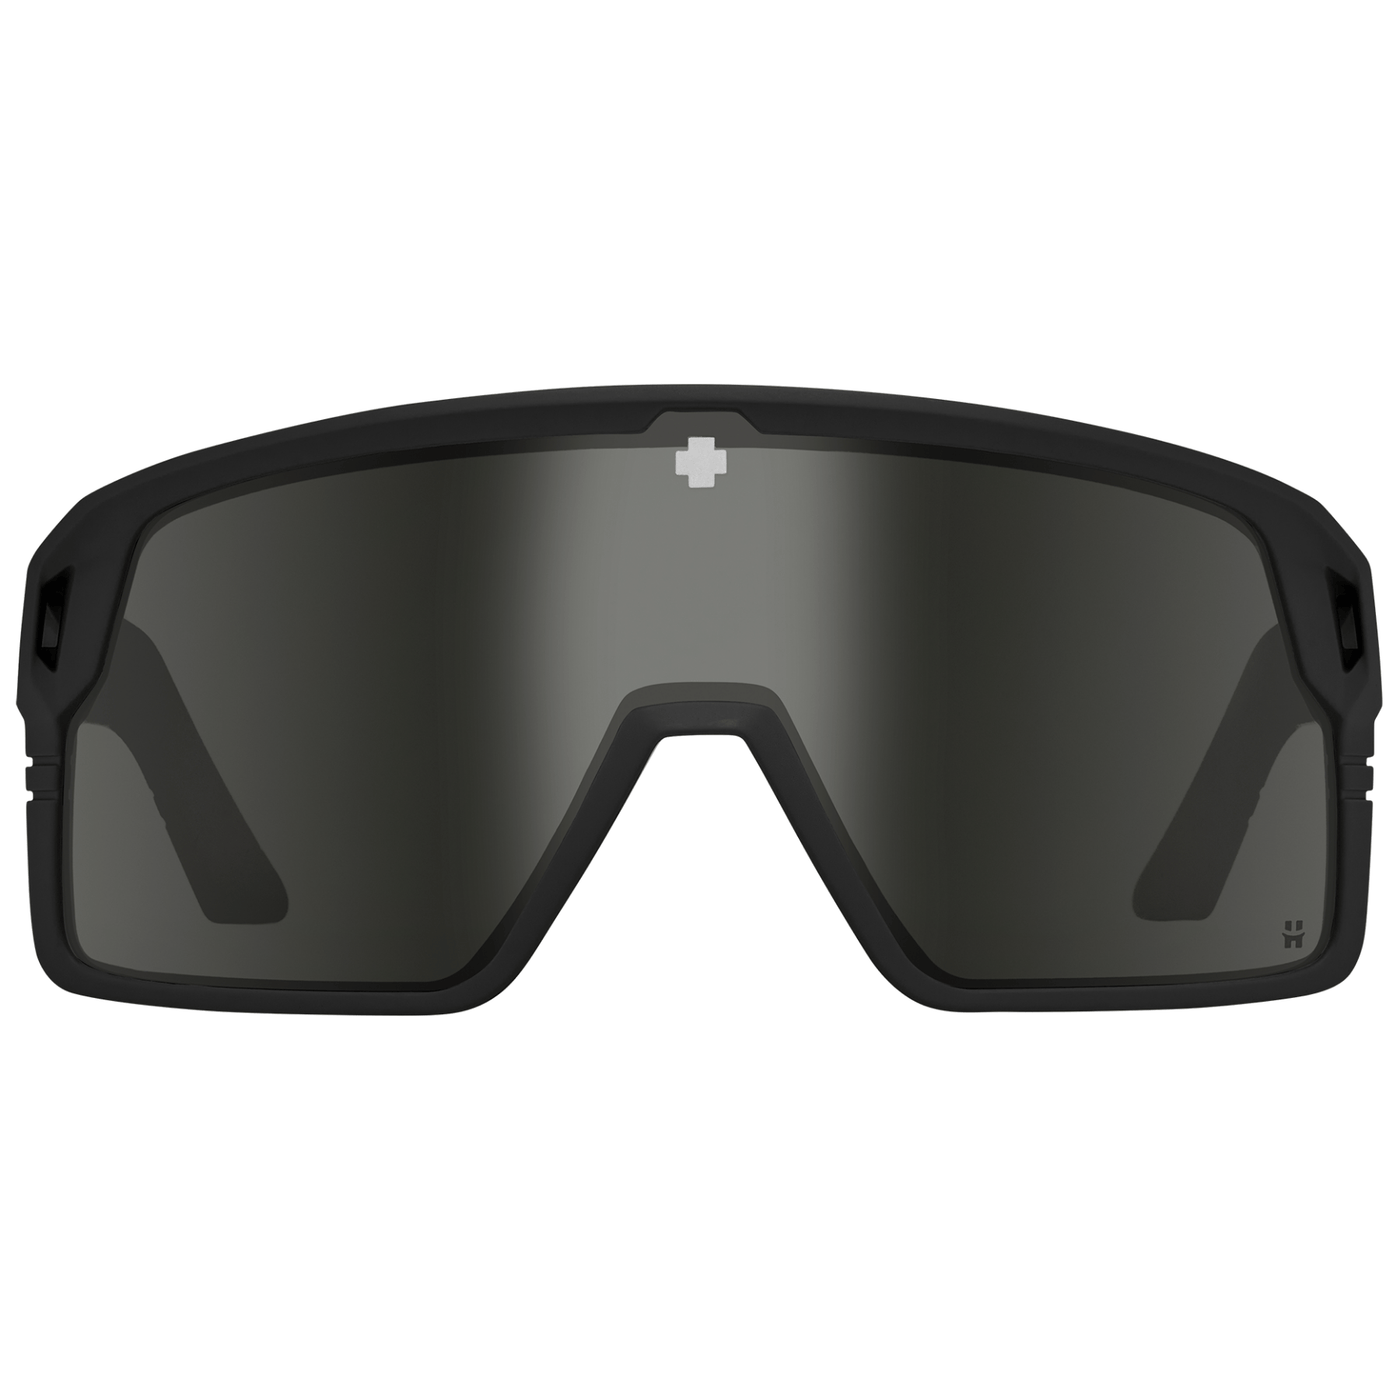 SPY MONOLITH Sunglasses, Happy Lens - Black 8Lines Shop - Fast Shipping